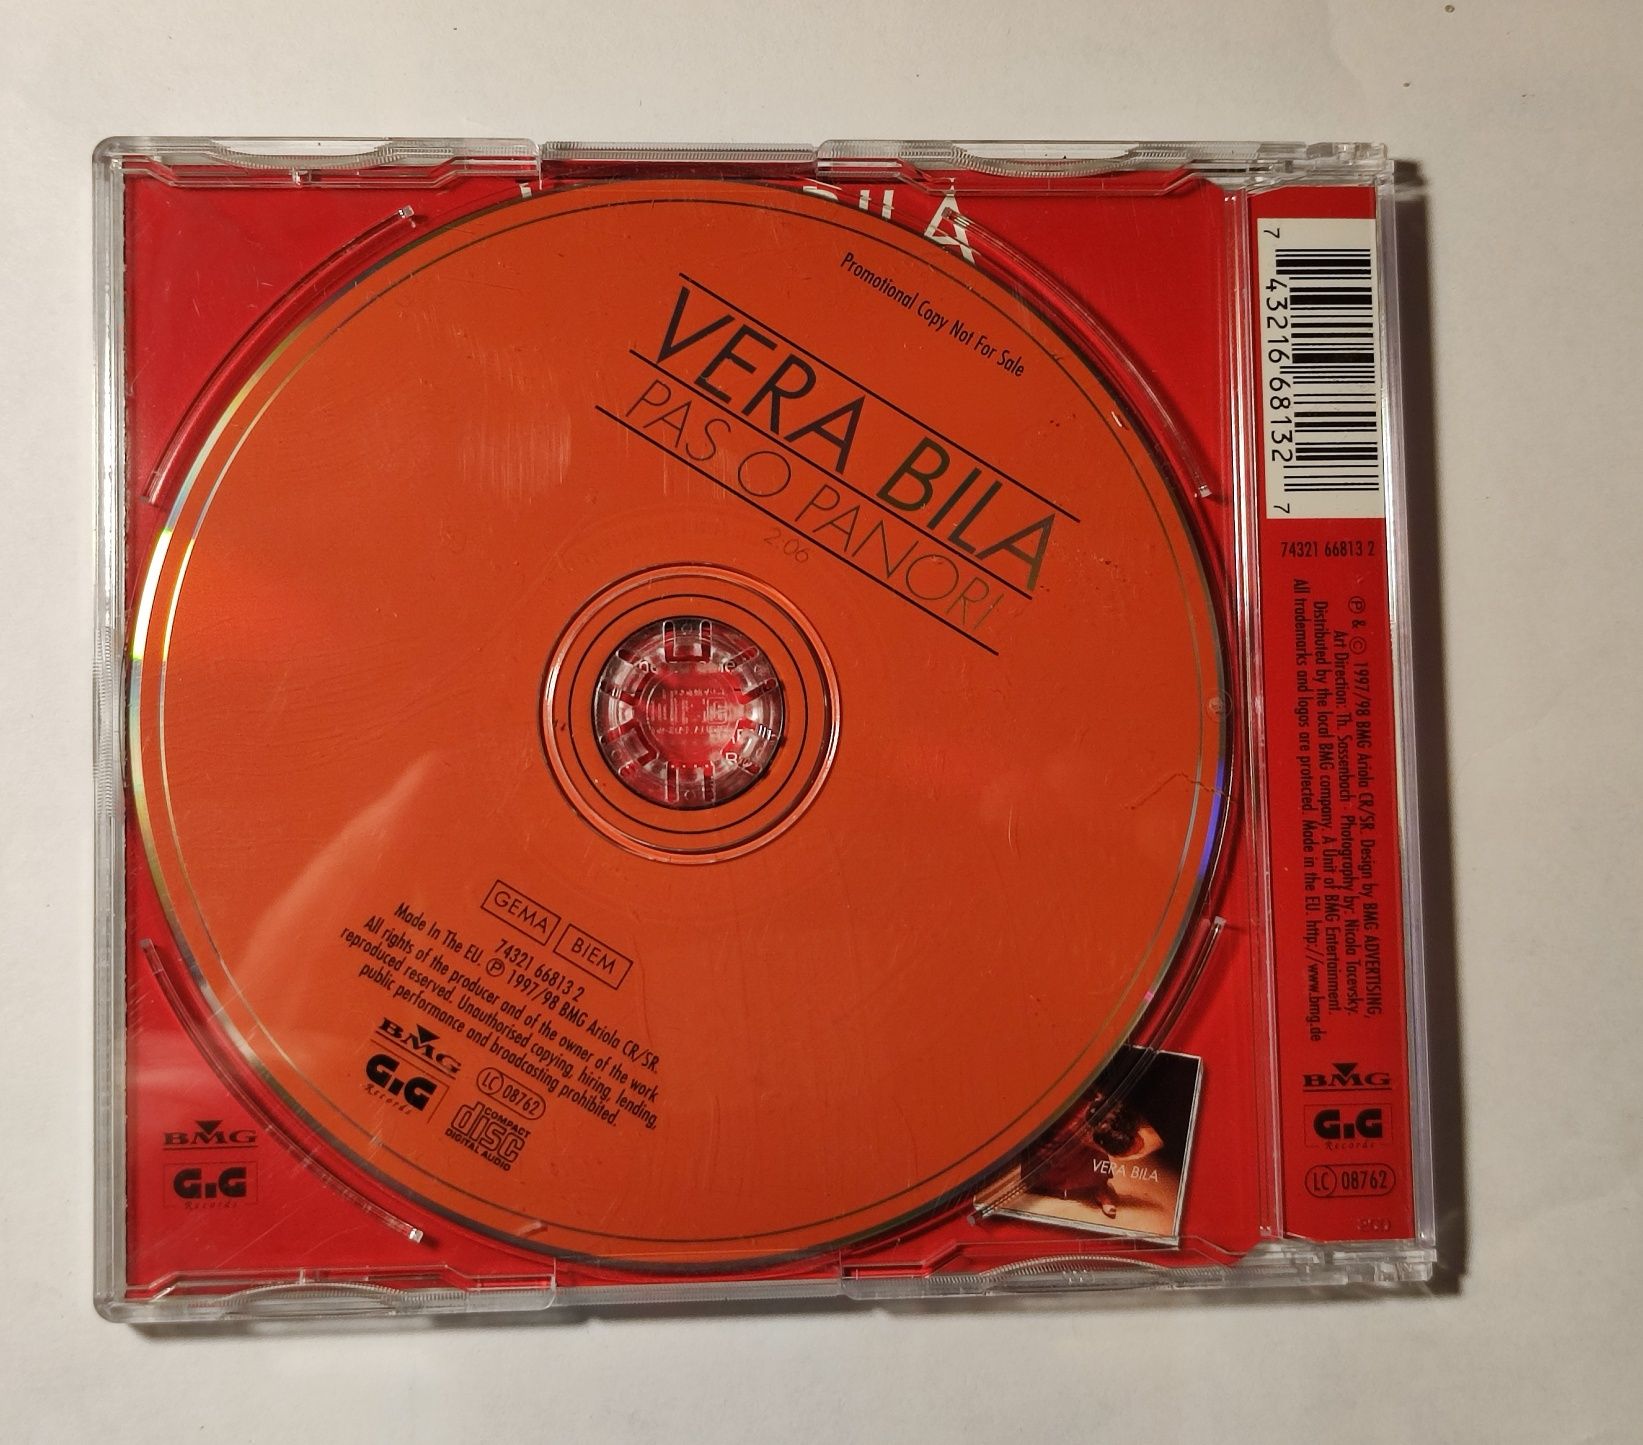 Pas O Panori Vera Bila singiel CD